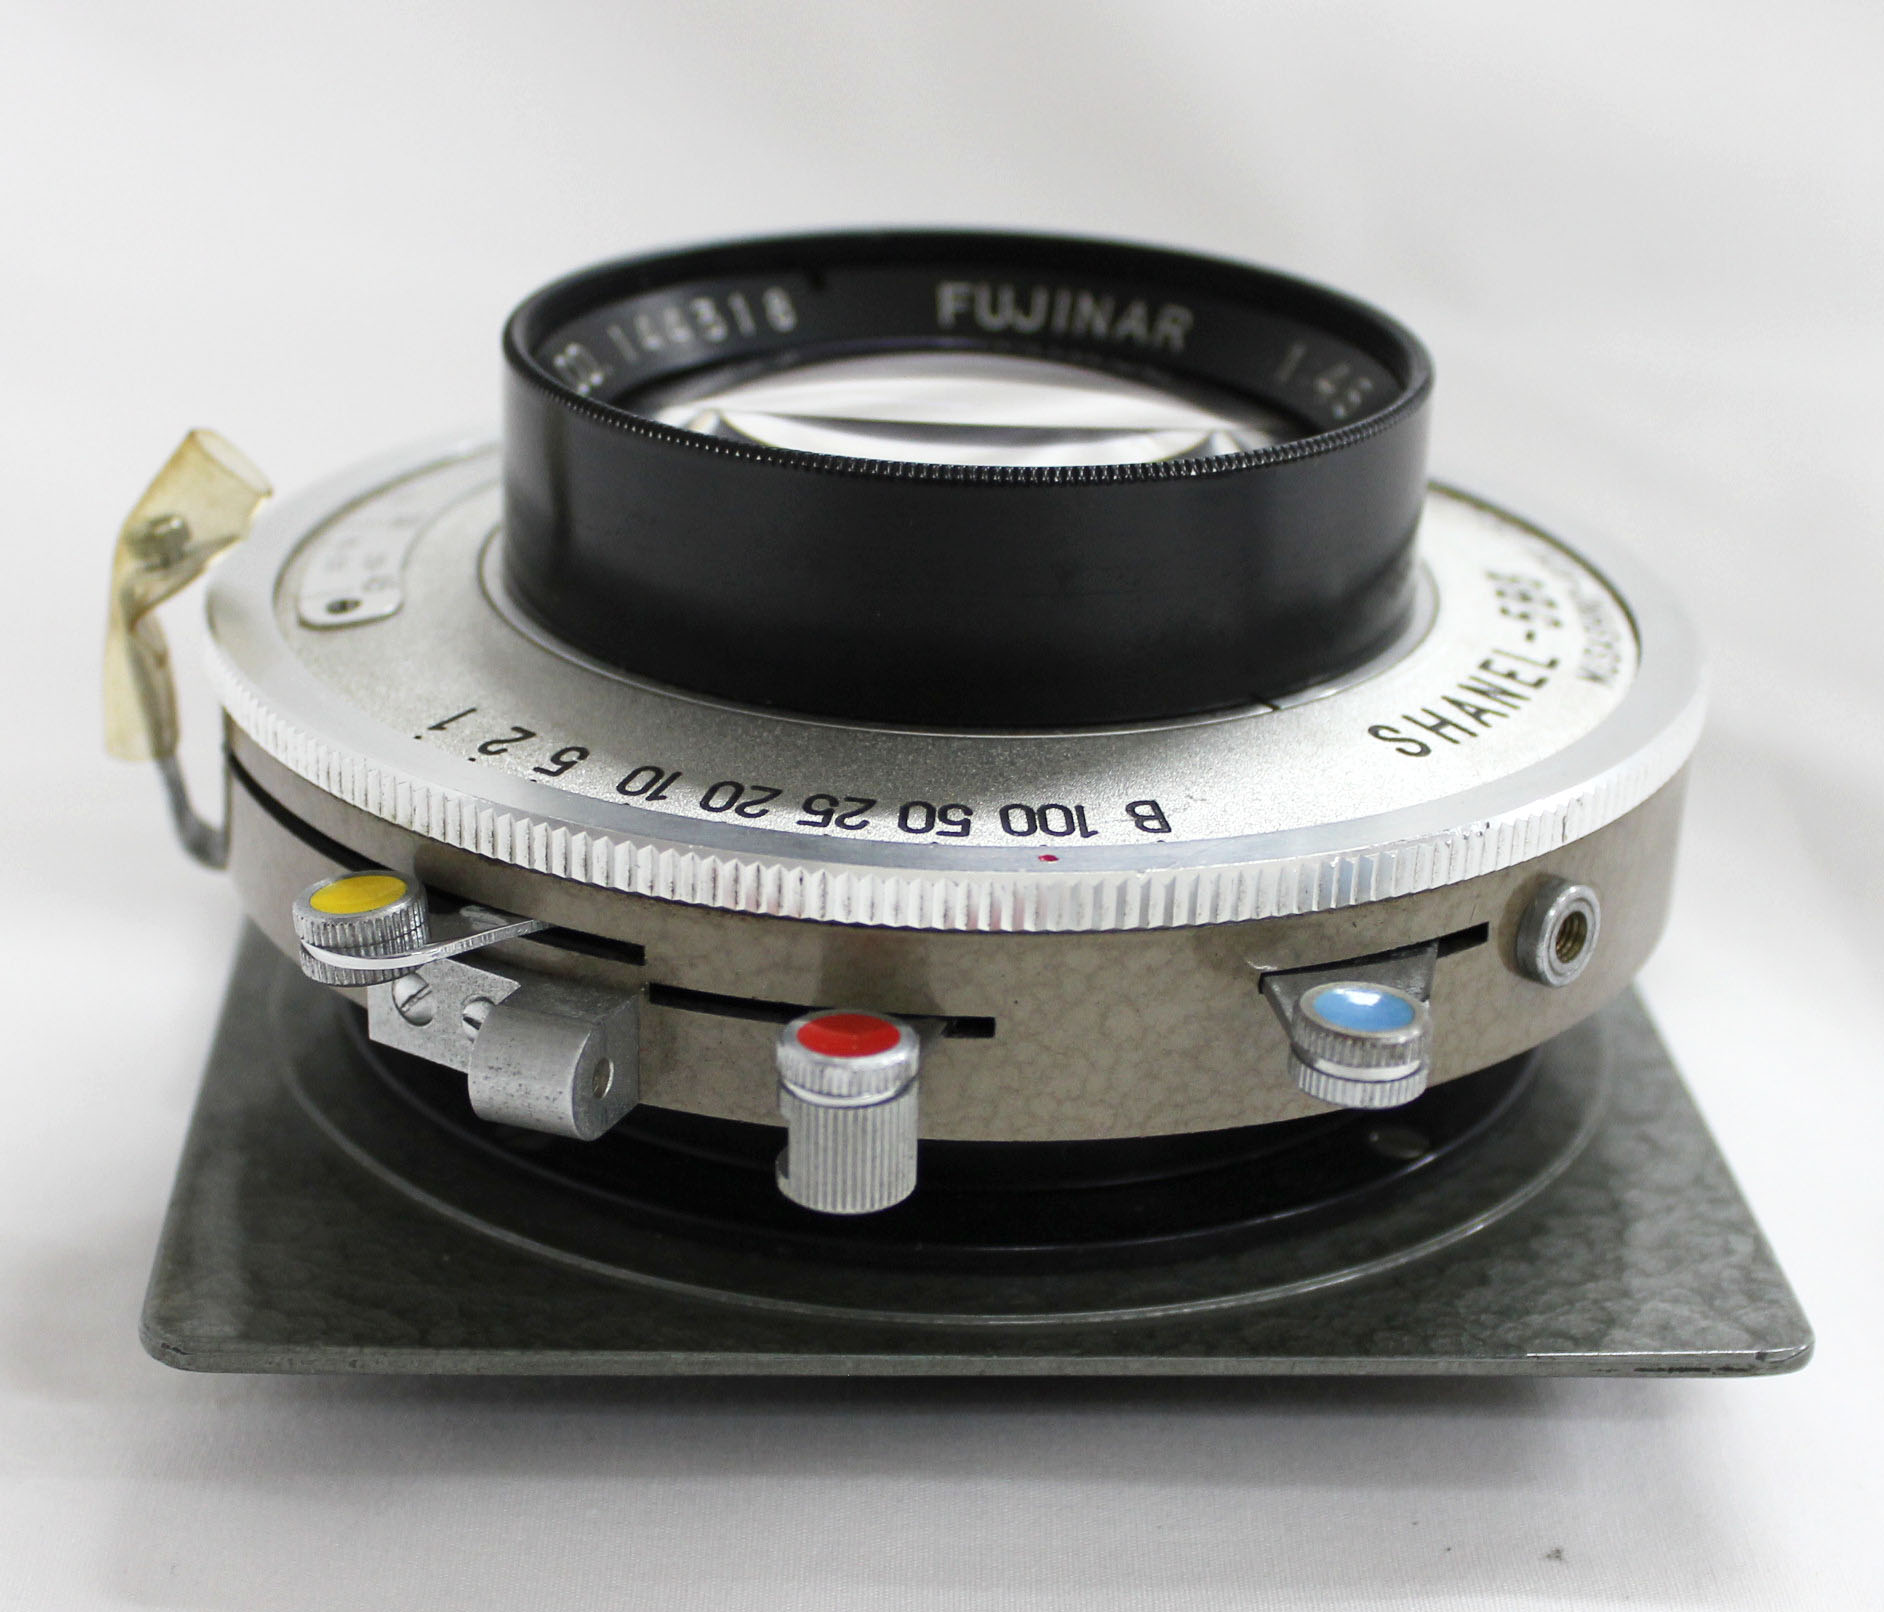 Fuji Fujinar 25cm 250mm F/4.5 Large Format Lens Shanel 5B-S from Japan  Photo 4